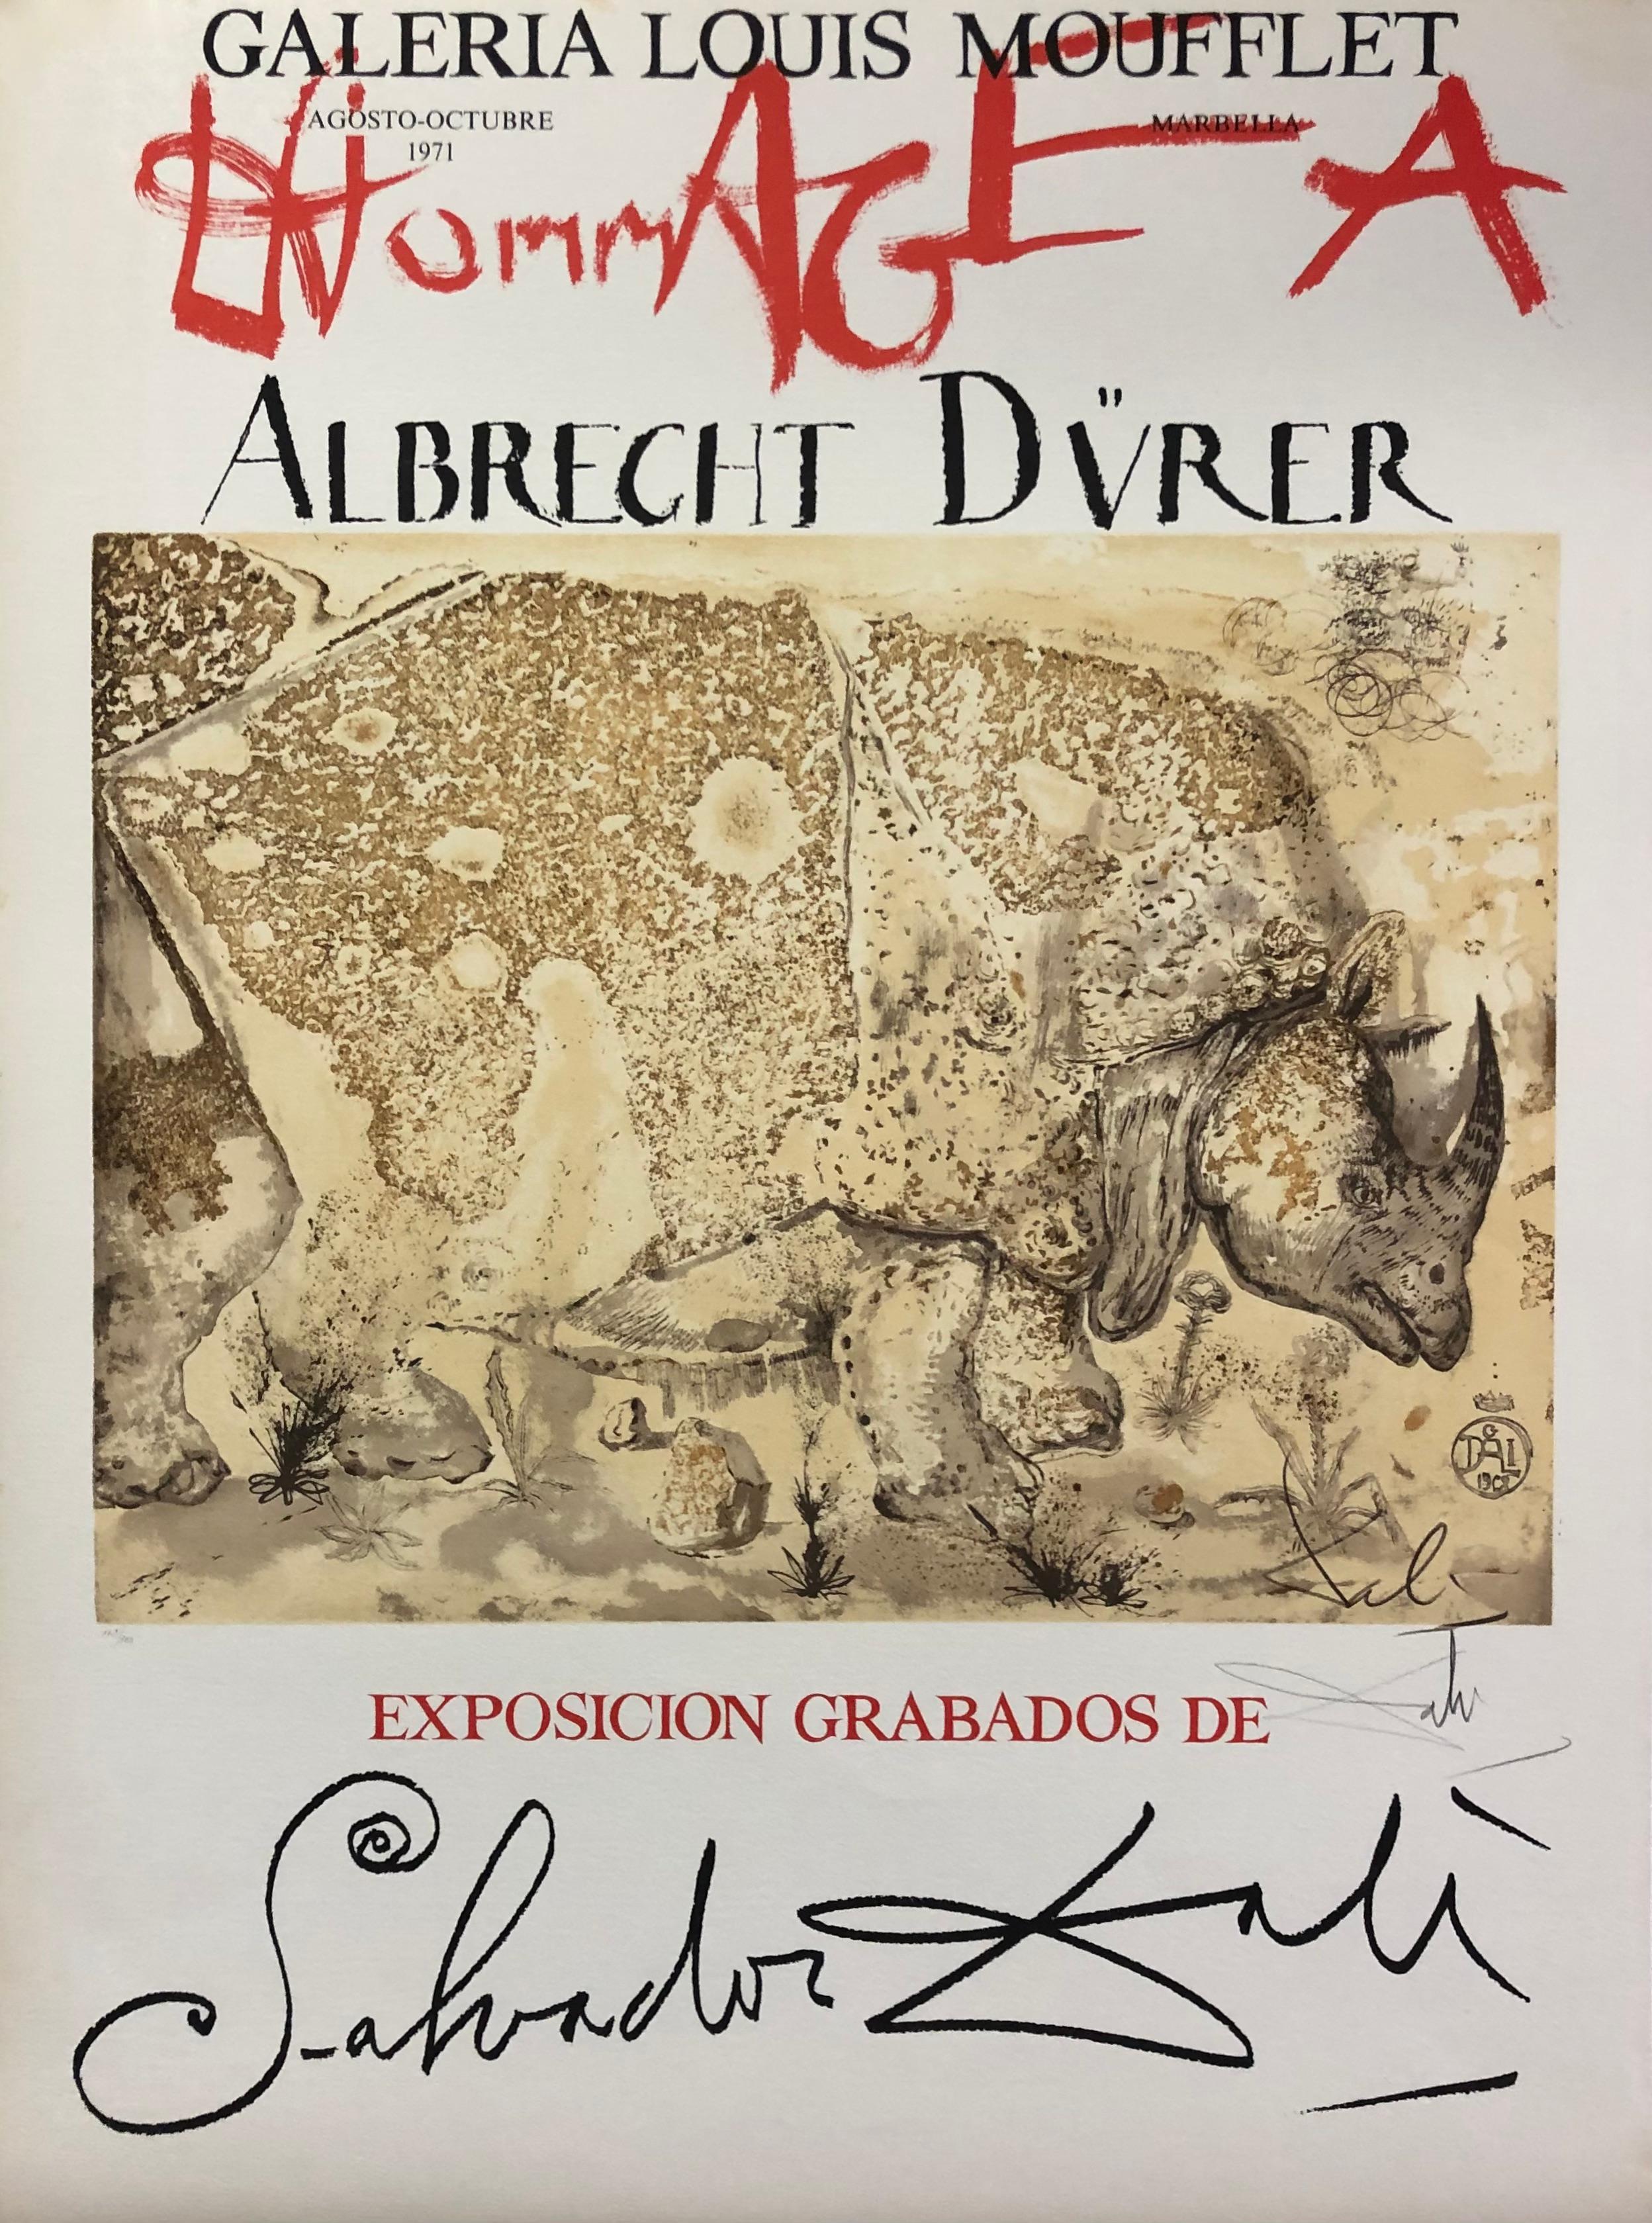 Les Rhinocéros. Tribute to Durer, 1971 - Print by Salvador Dalí